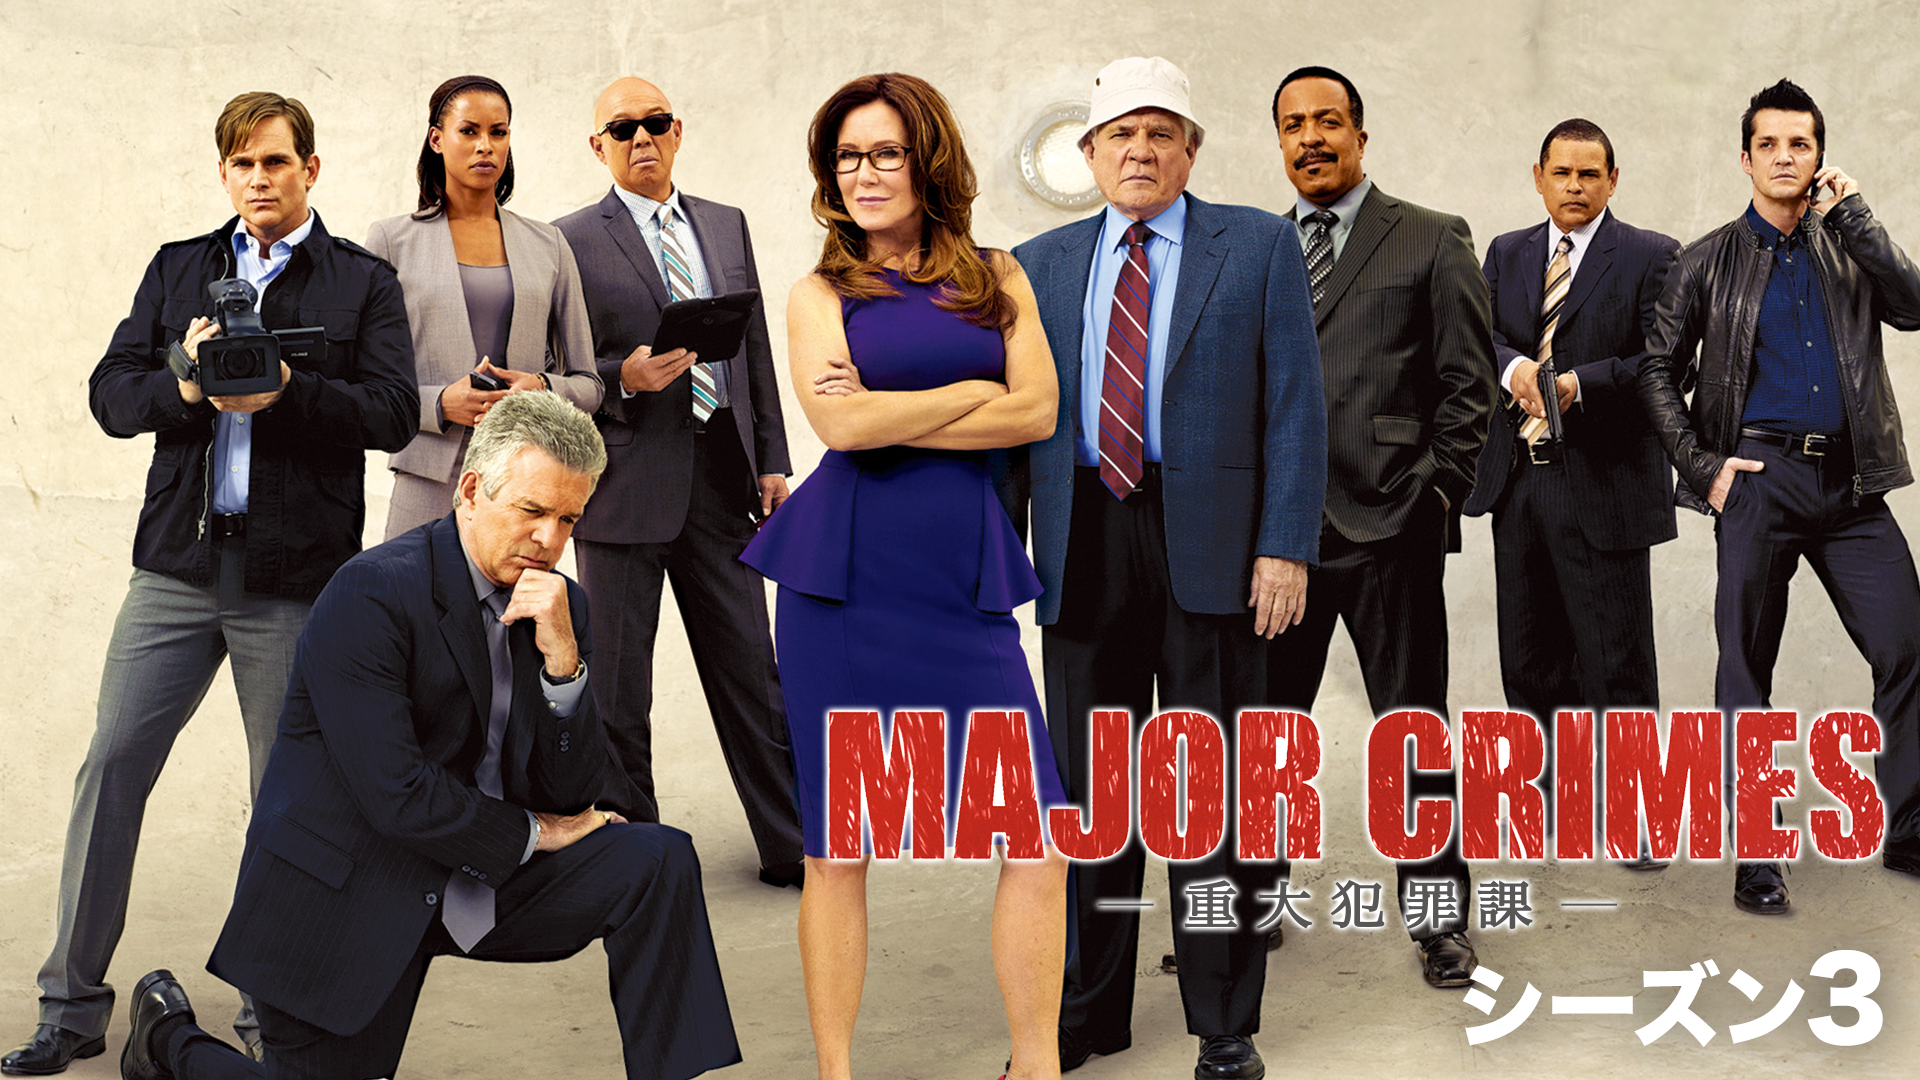 Major Crimes 重大犯罪課 シーズン３ 海外ドラマ 14 の動画視聴 U Next 31日間無料トライアル